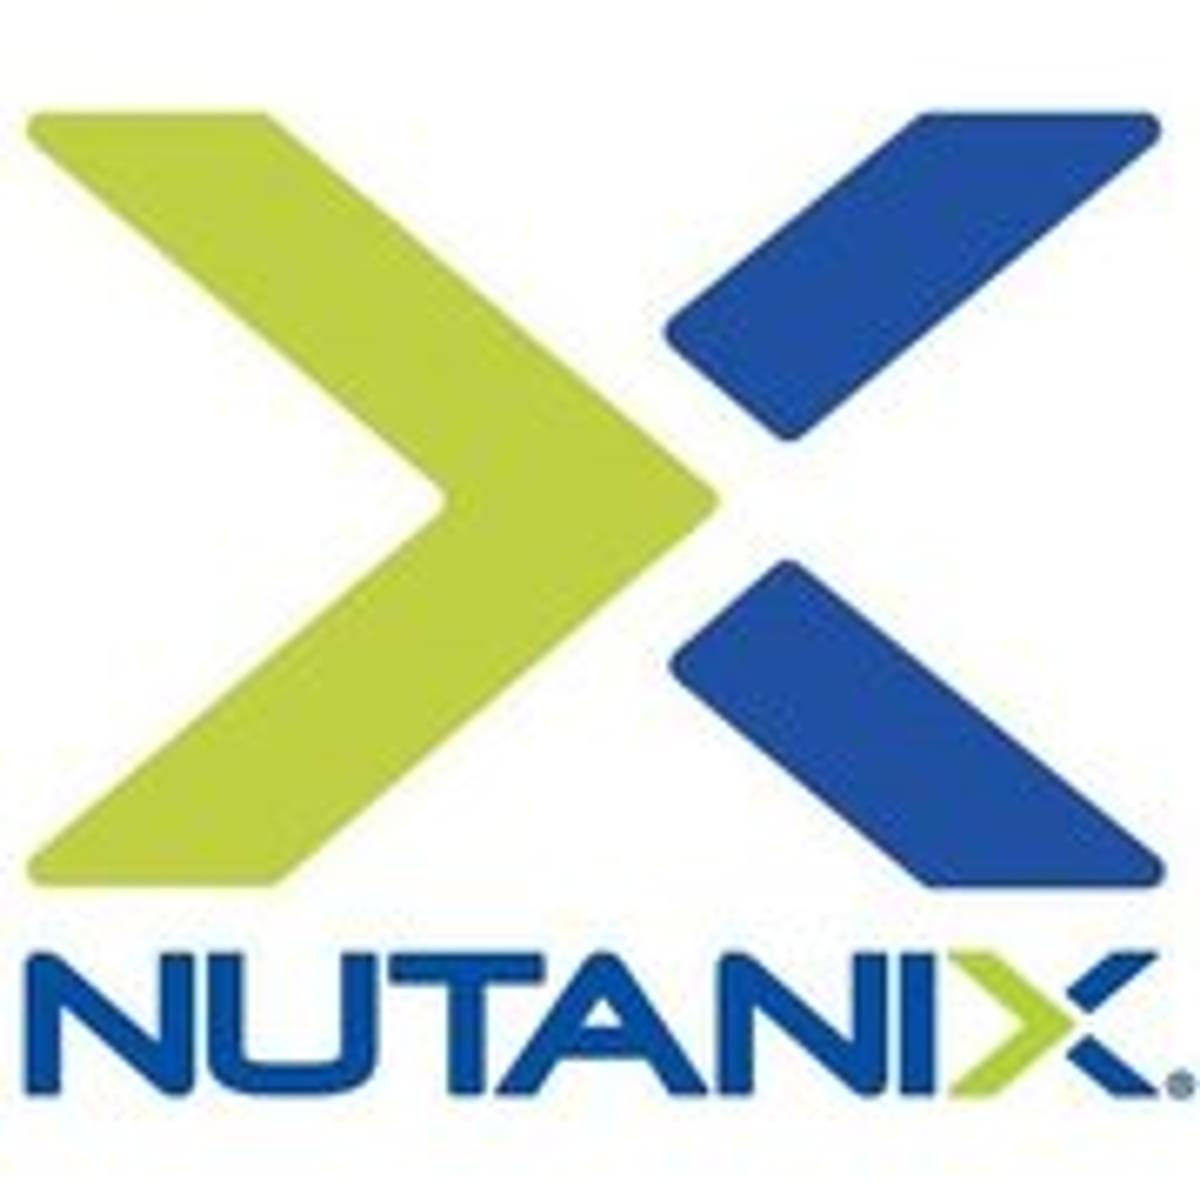 Nutanix en Intel werken nauwer samen rond channel partner business image